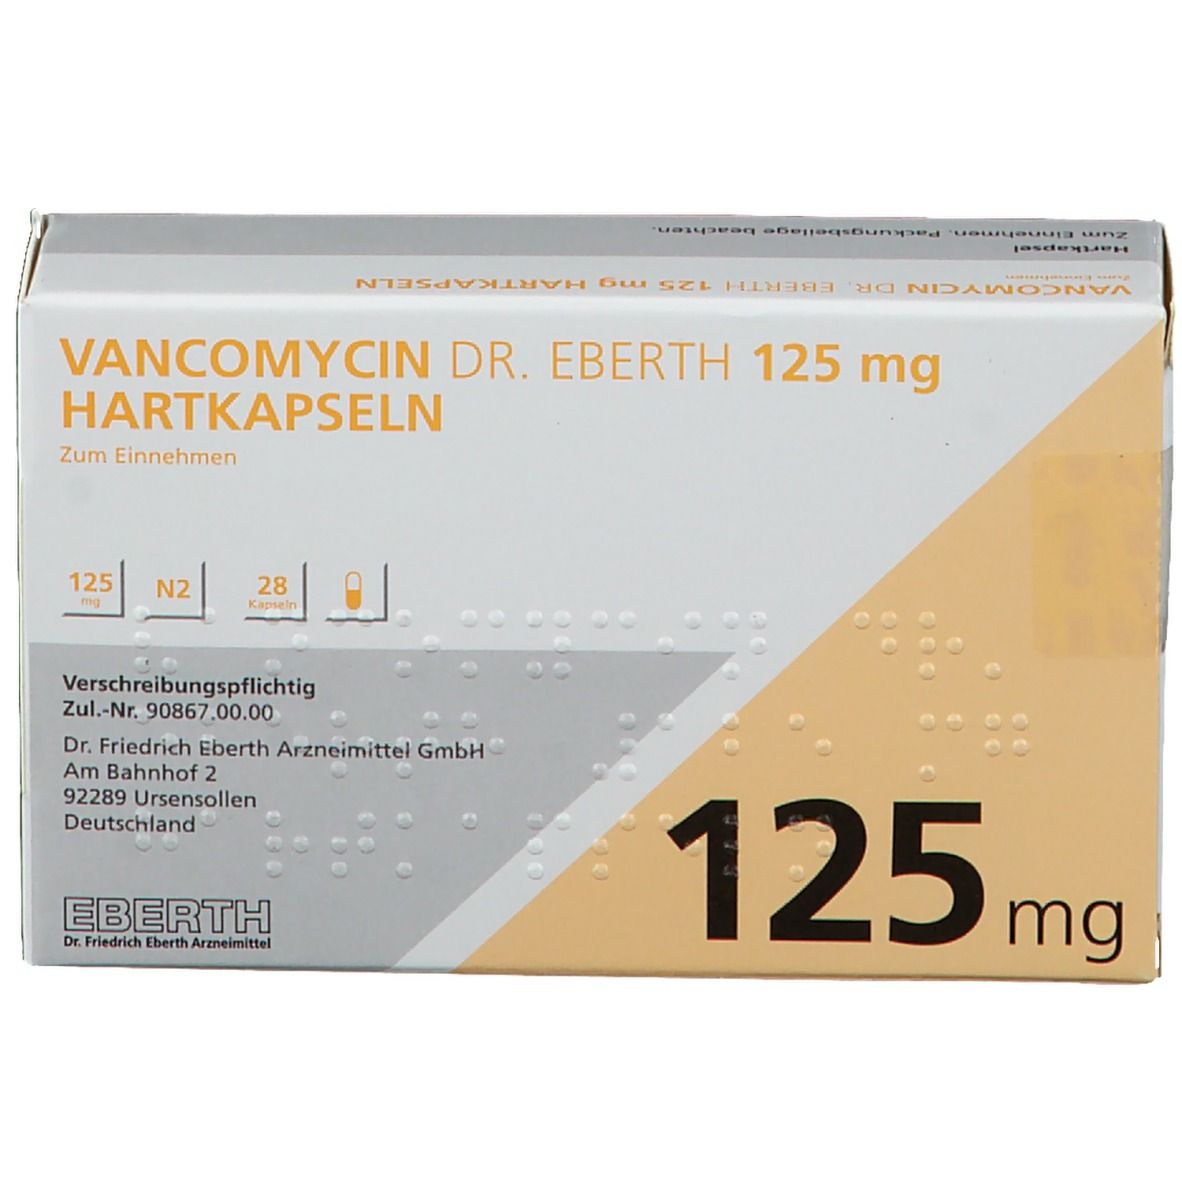 VANCOMYCIN DR. EBERTH 125 mg